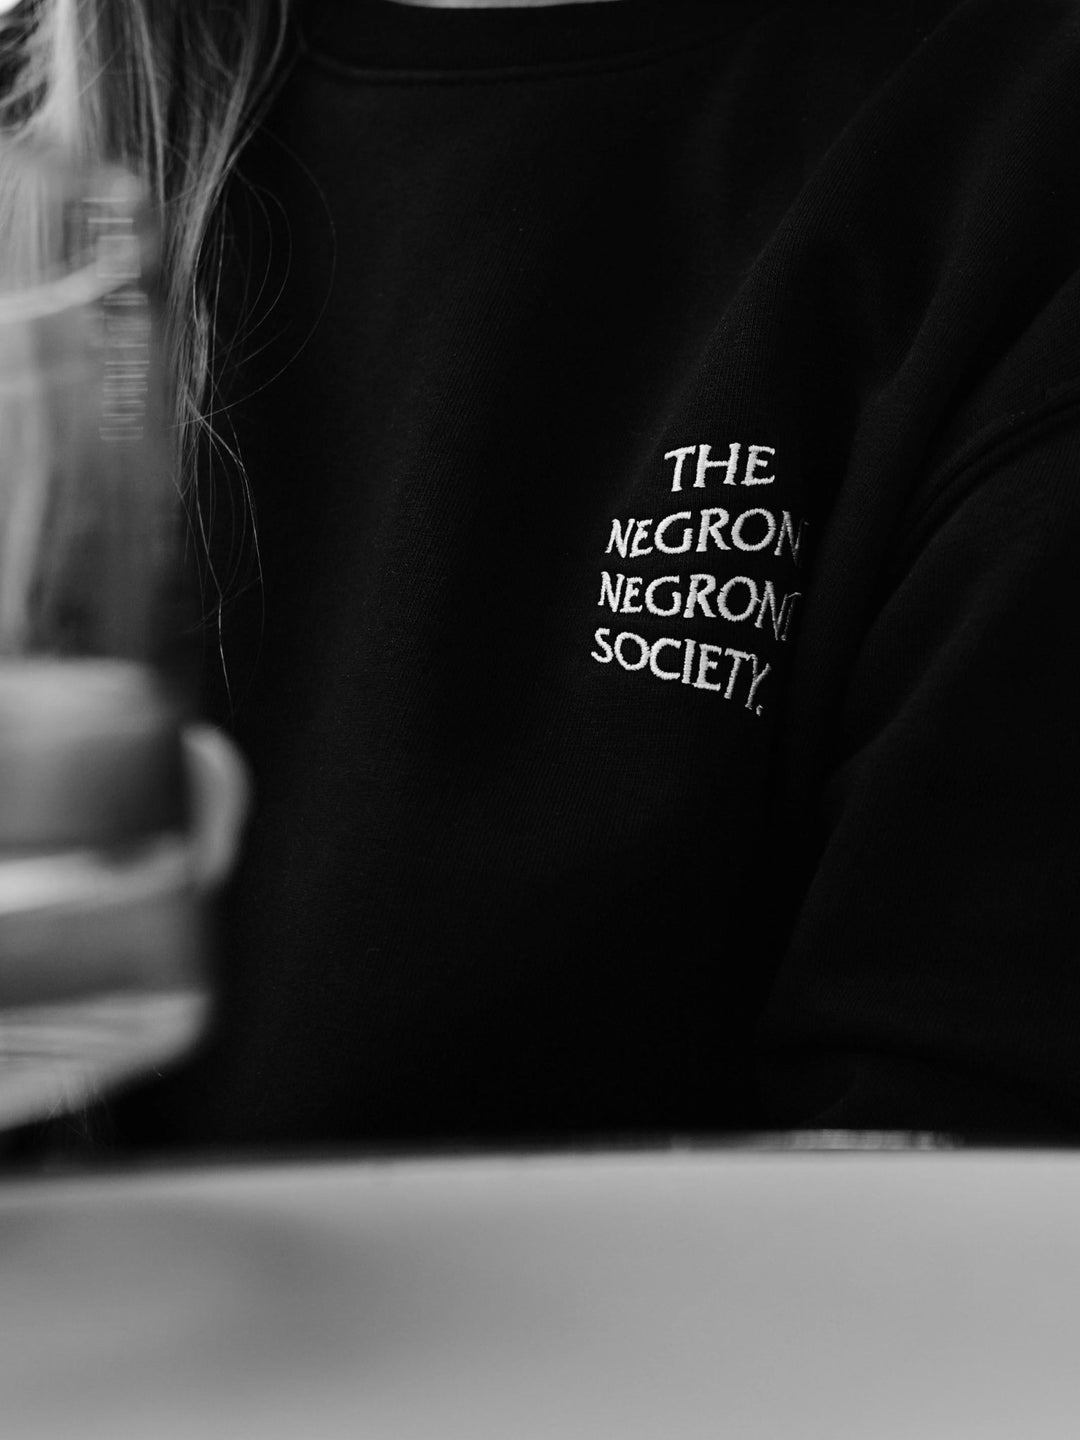 The Negroni Society eco sweatshirt - White - Cocktailored